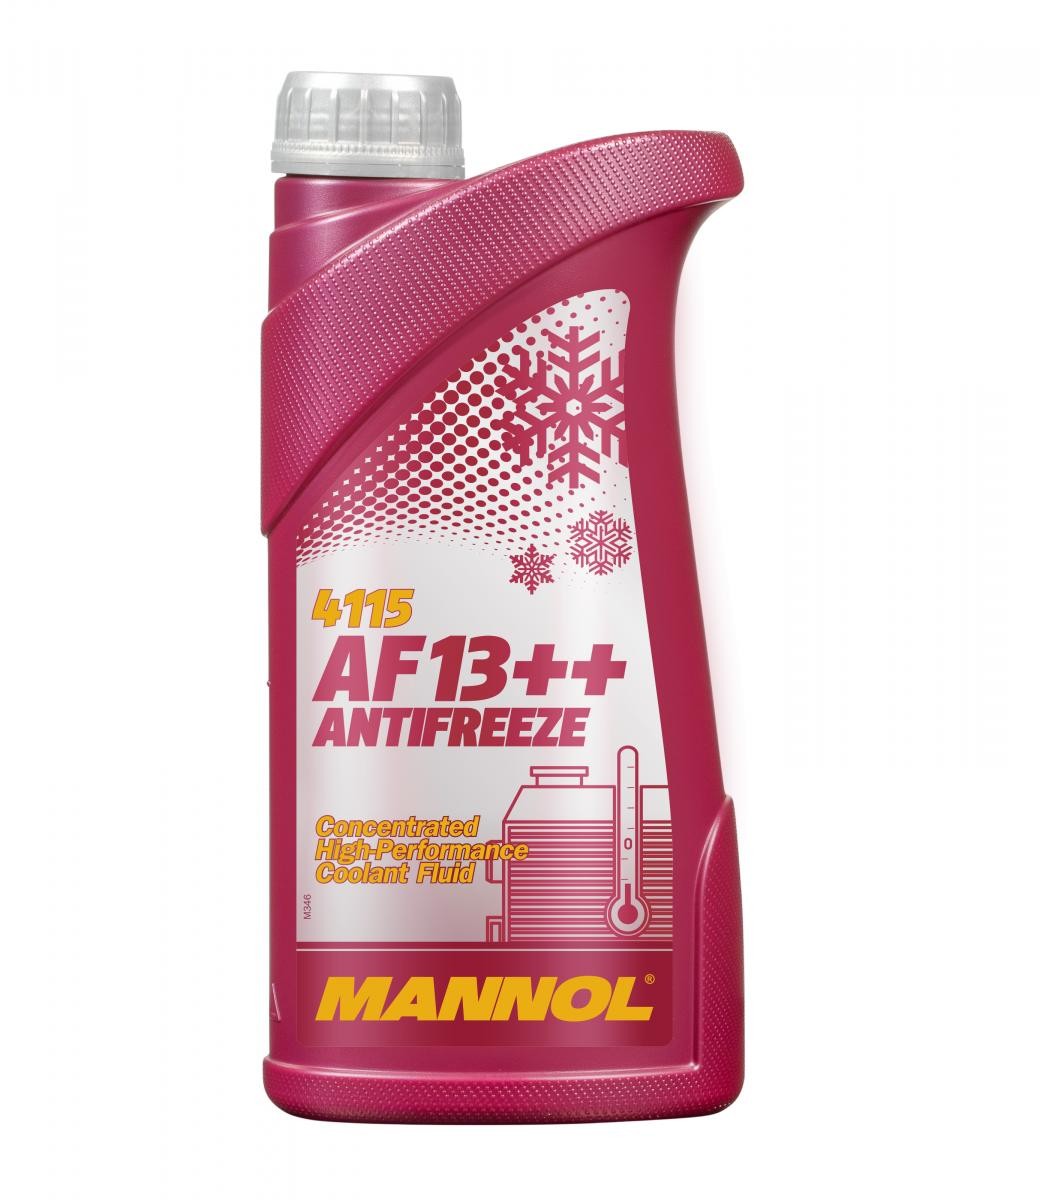 AMAZONAS AME Kühlmittel G12 Rot, 1l, -38(50/50) MANNOL AF13++, High-performance MN4115-1